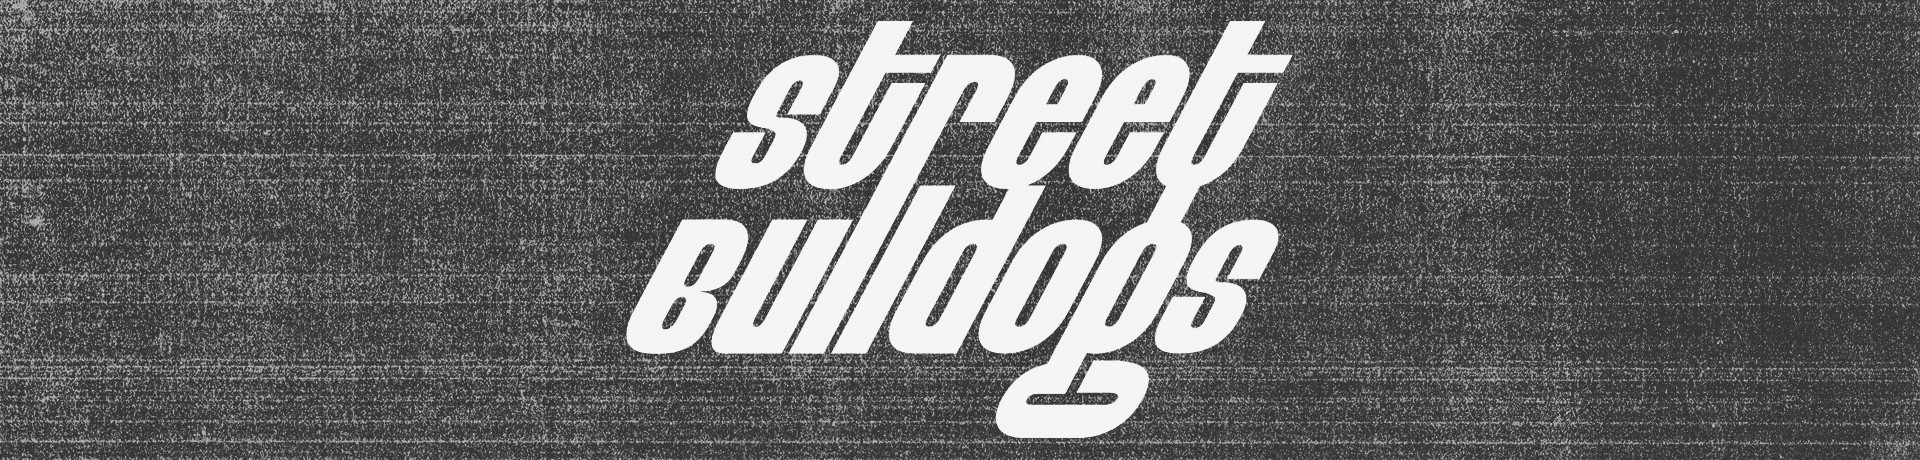 Street Bulldogs - Bulldog [Soft Hoodie]